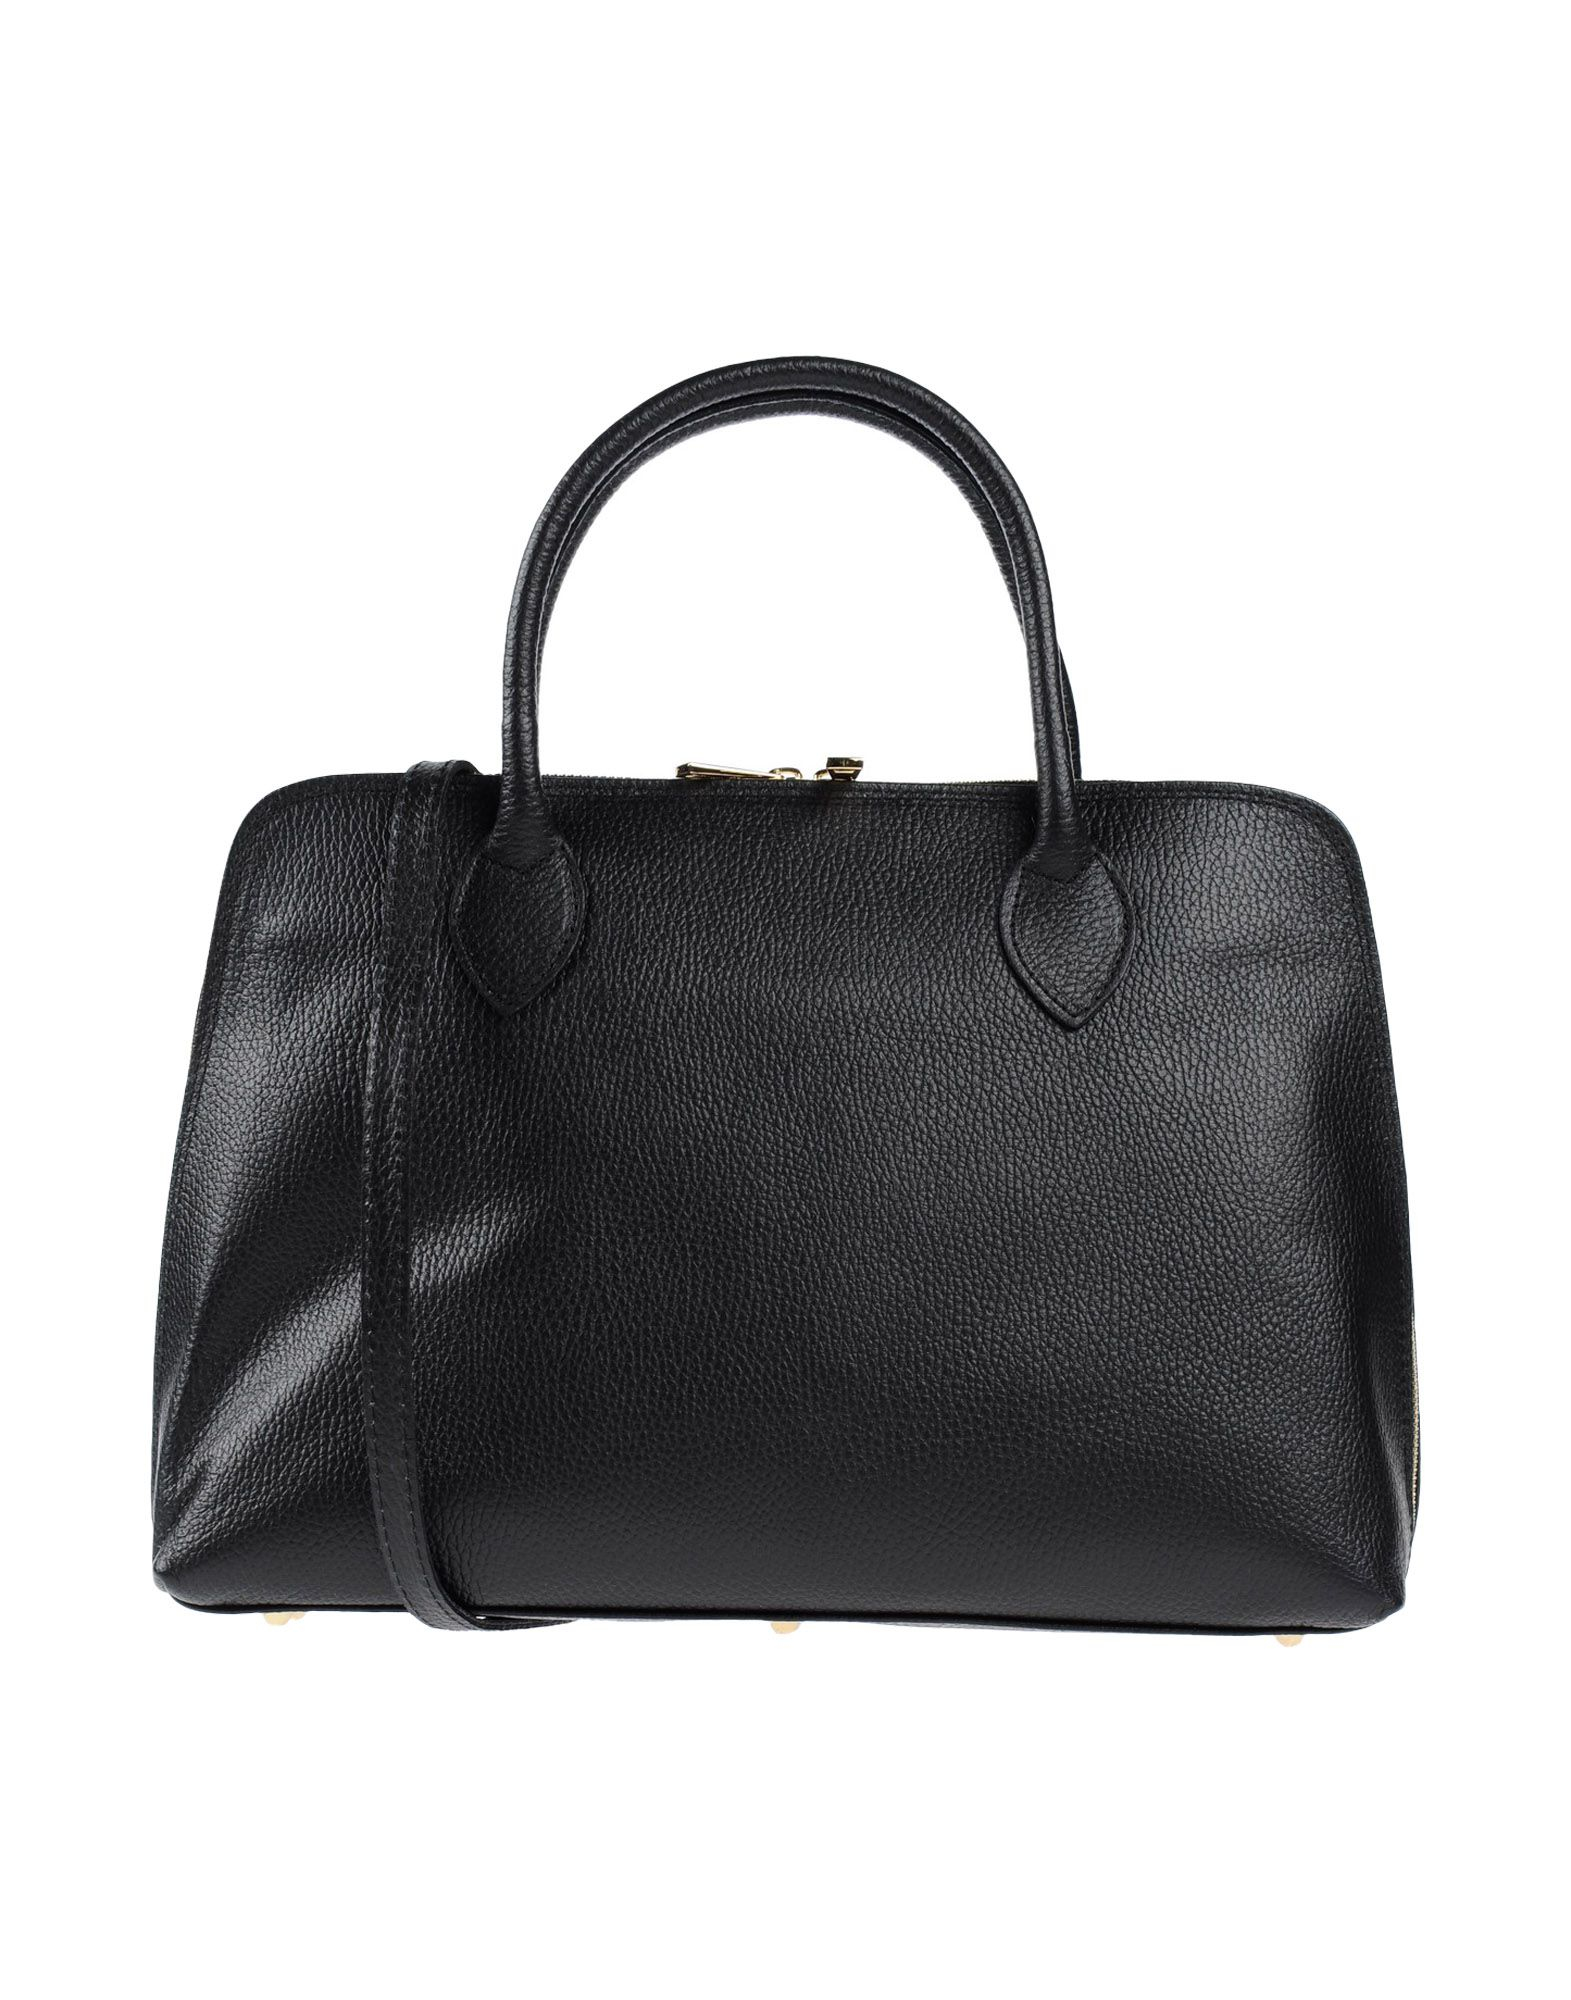 Jean Louis Scherrer Leather Handbag in Black | Lyst